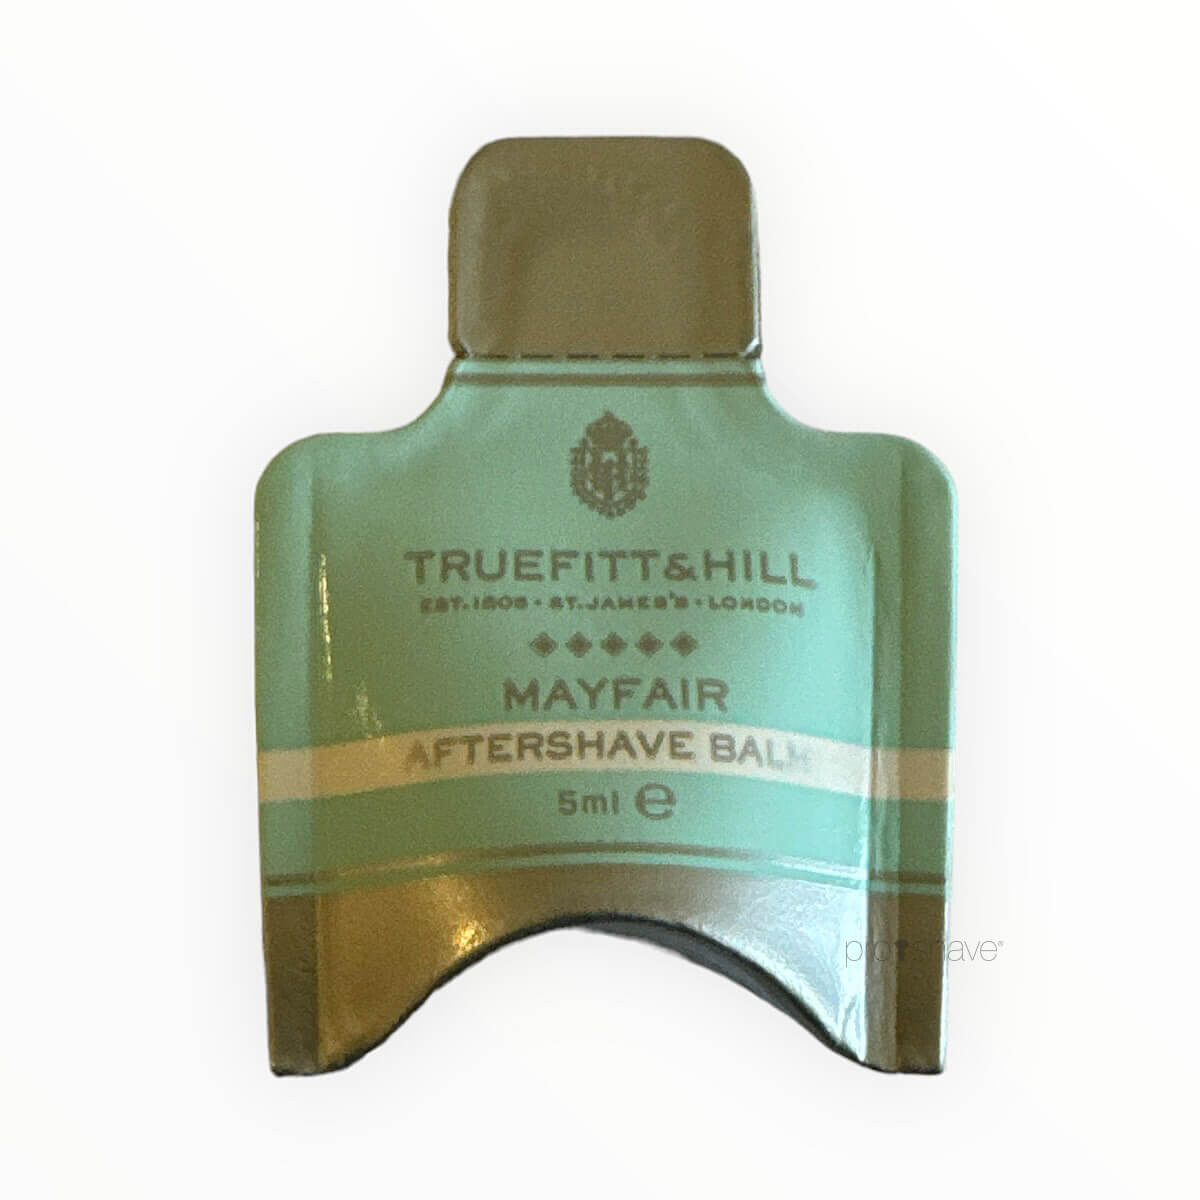 Se Truefitt & Hill Mayfair Aftershave Balm Sample Pack, 5 ml. hos Proshave